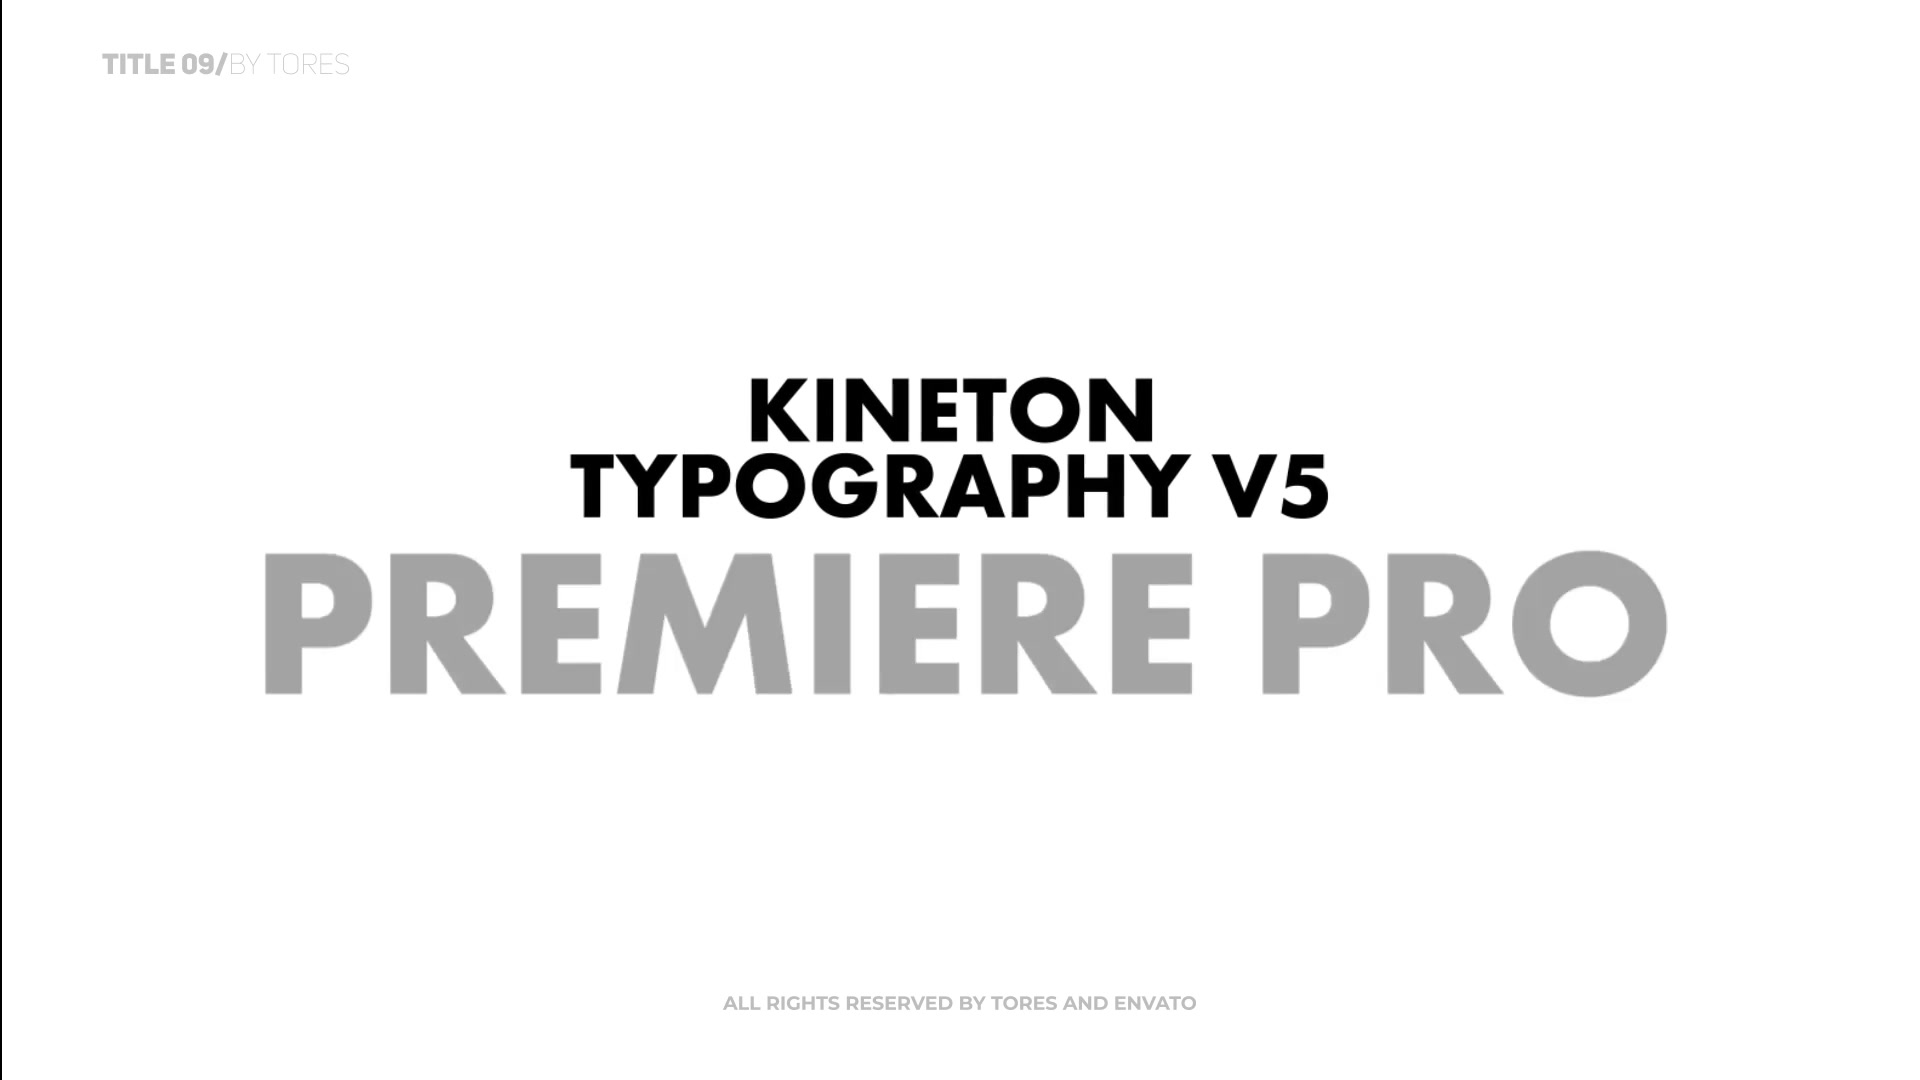 Kinetic Typography Titles Kineton \ Premiere Pro Videohive 30602690 Premiere Pro Image 11